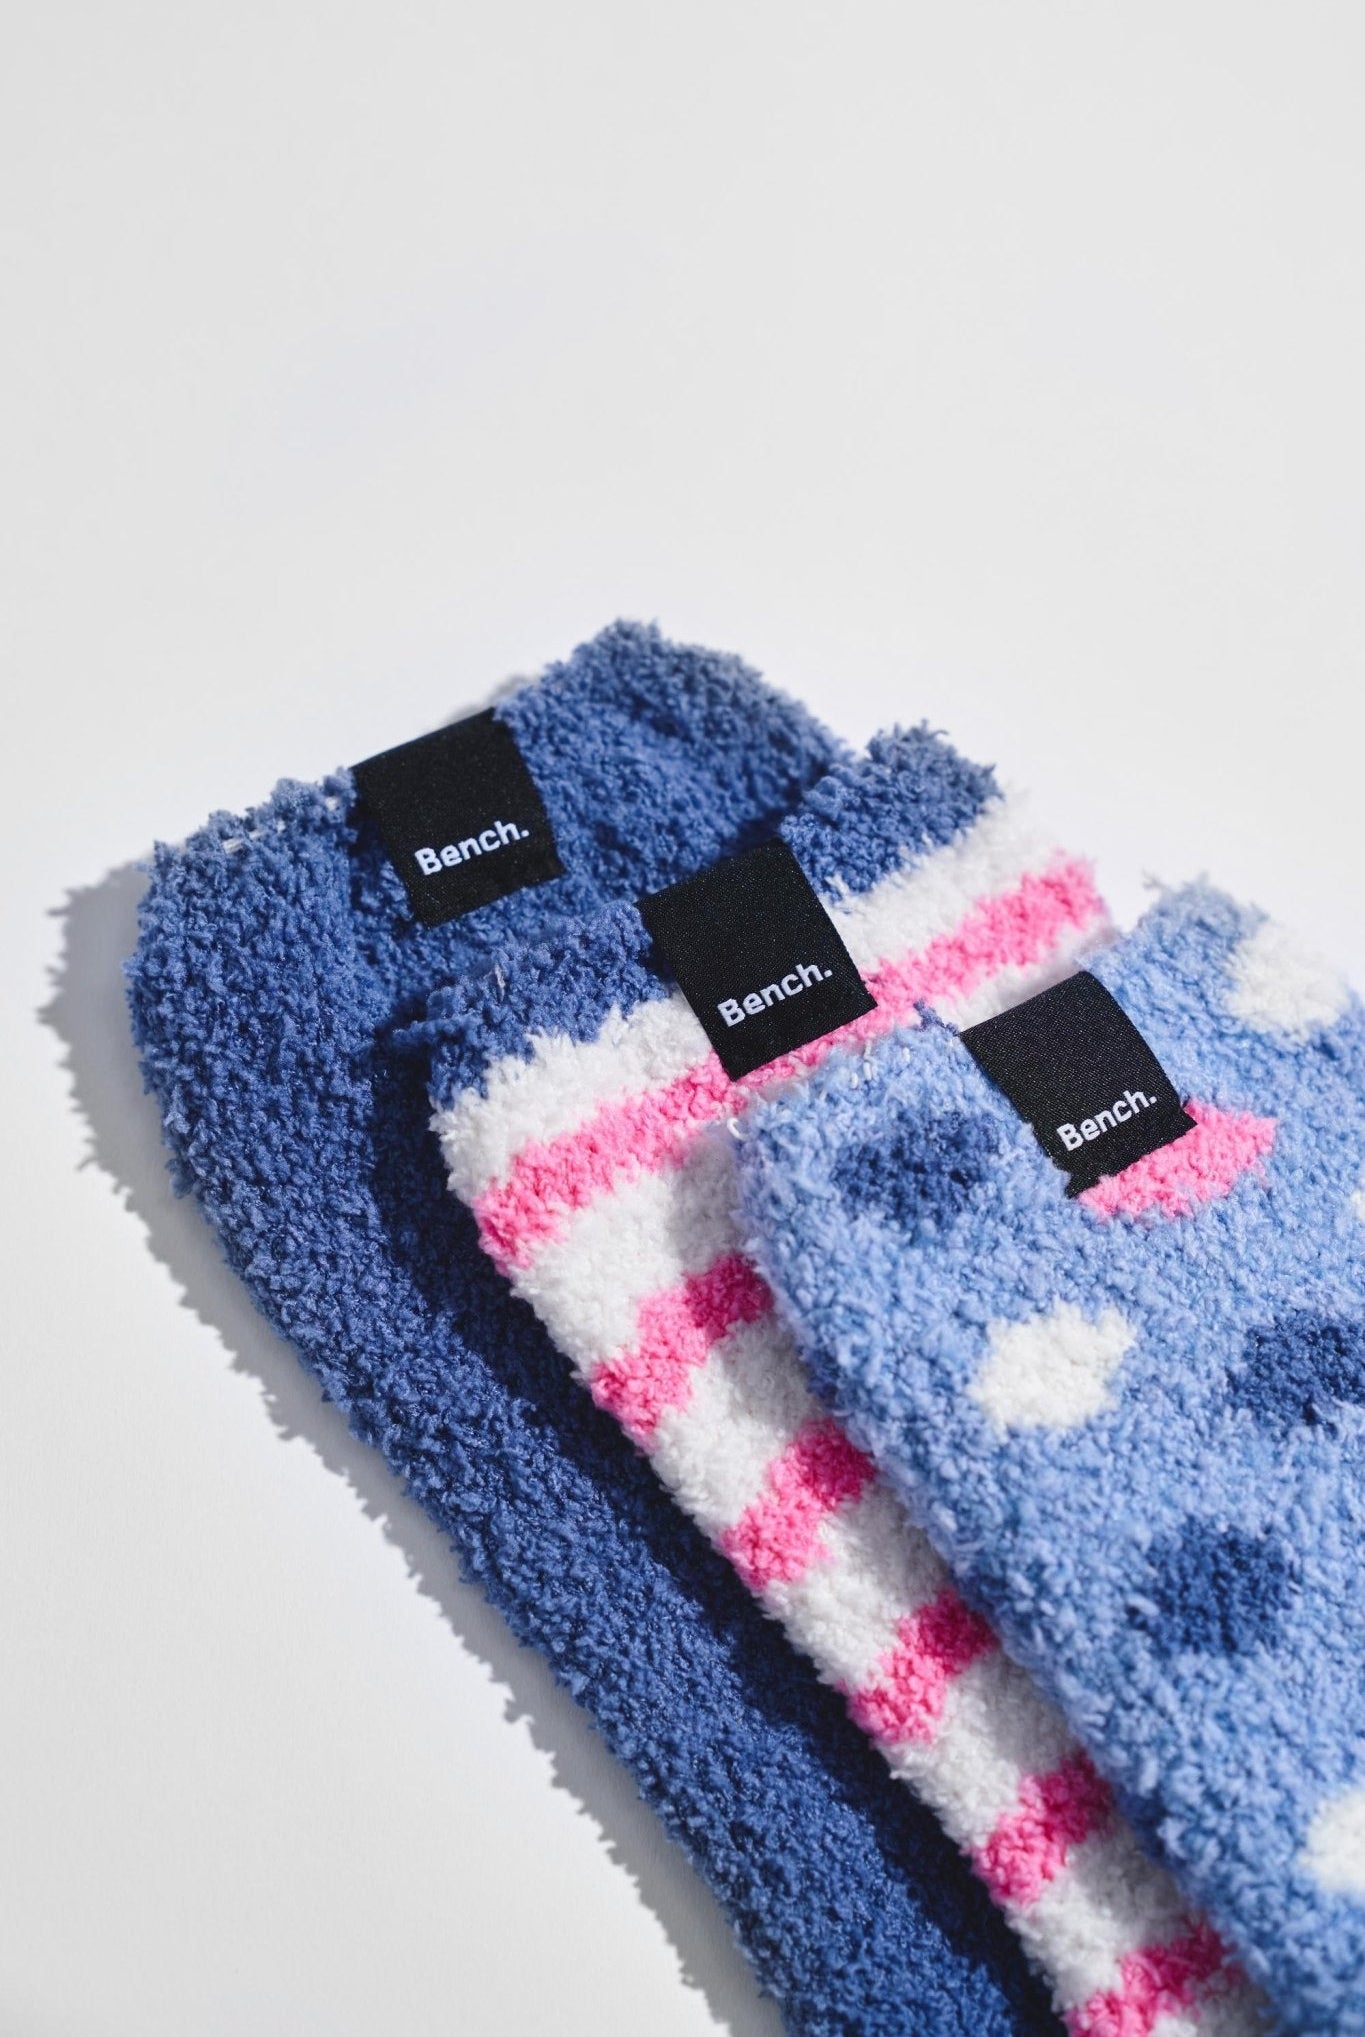 Womens 'MILDRED' 3 Pack Slipper Socks - ASSORTED - Shop at www.Bench.co.uk #LoveMyHood